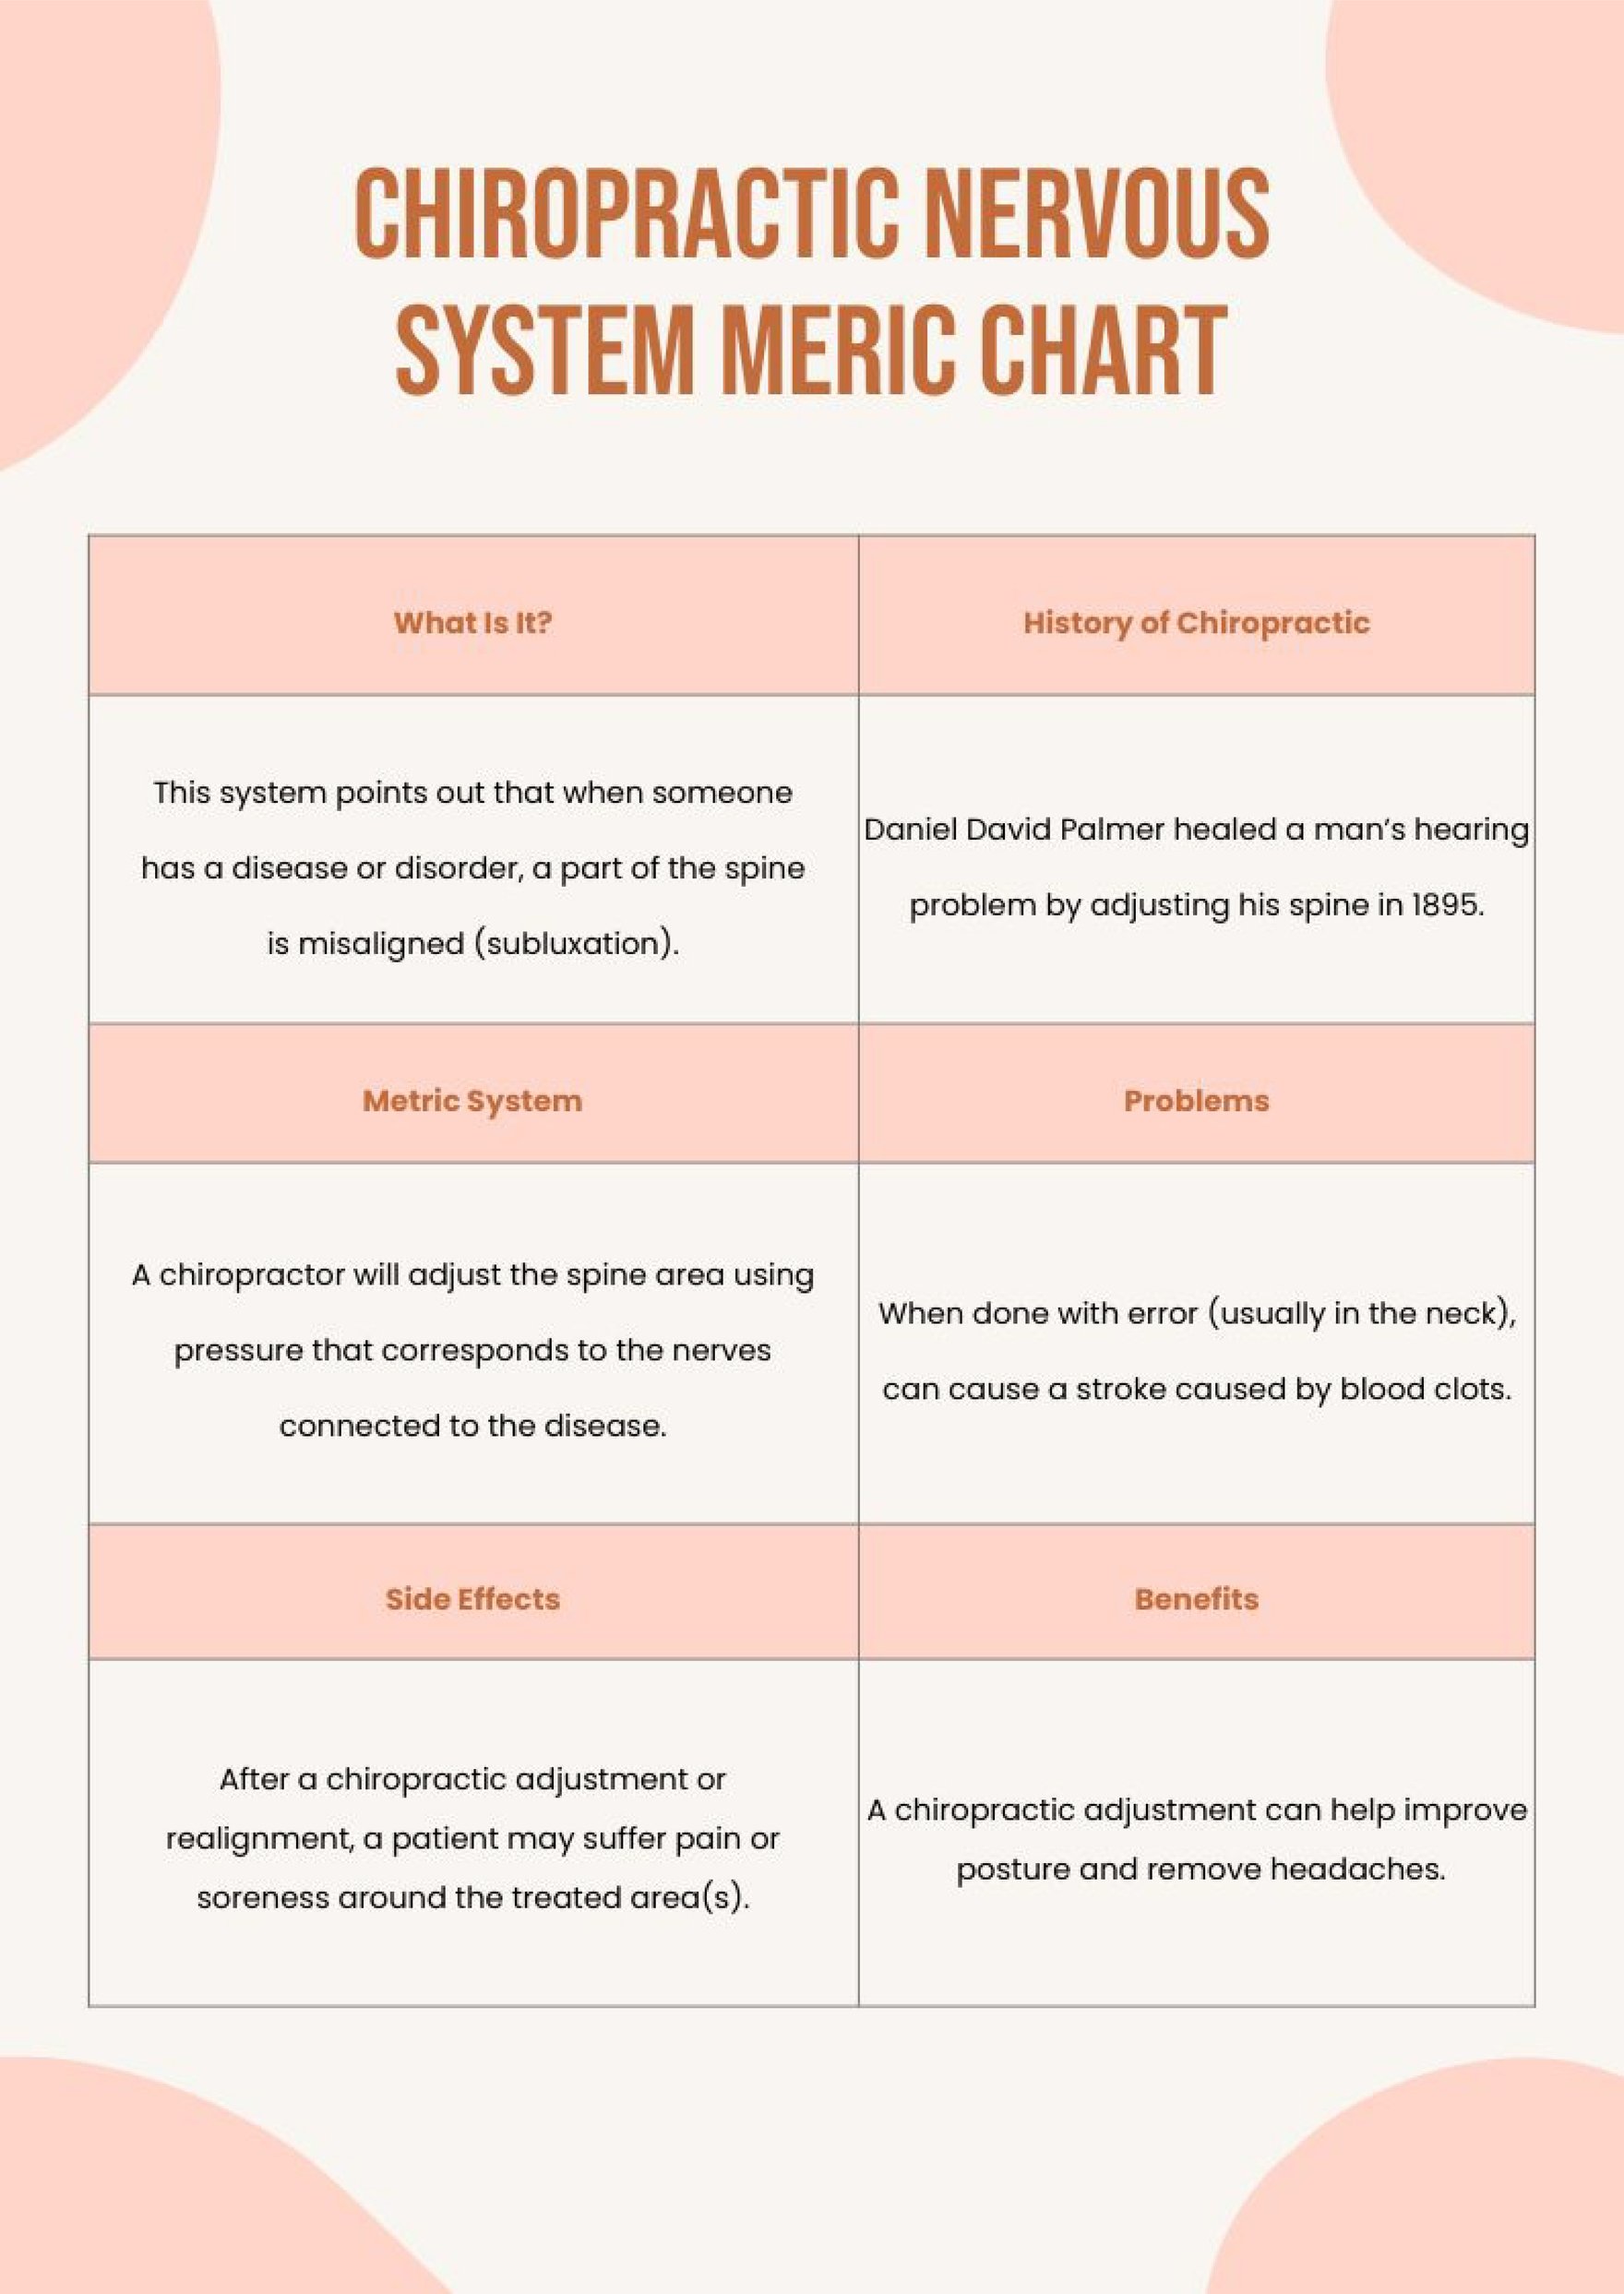 Chiropractic Nervous System Meric Chart in PDF, Illustrator